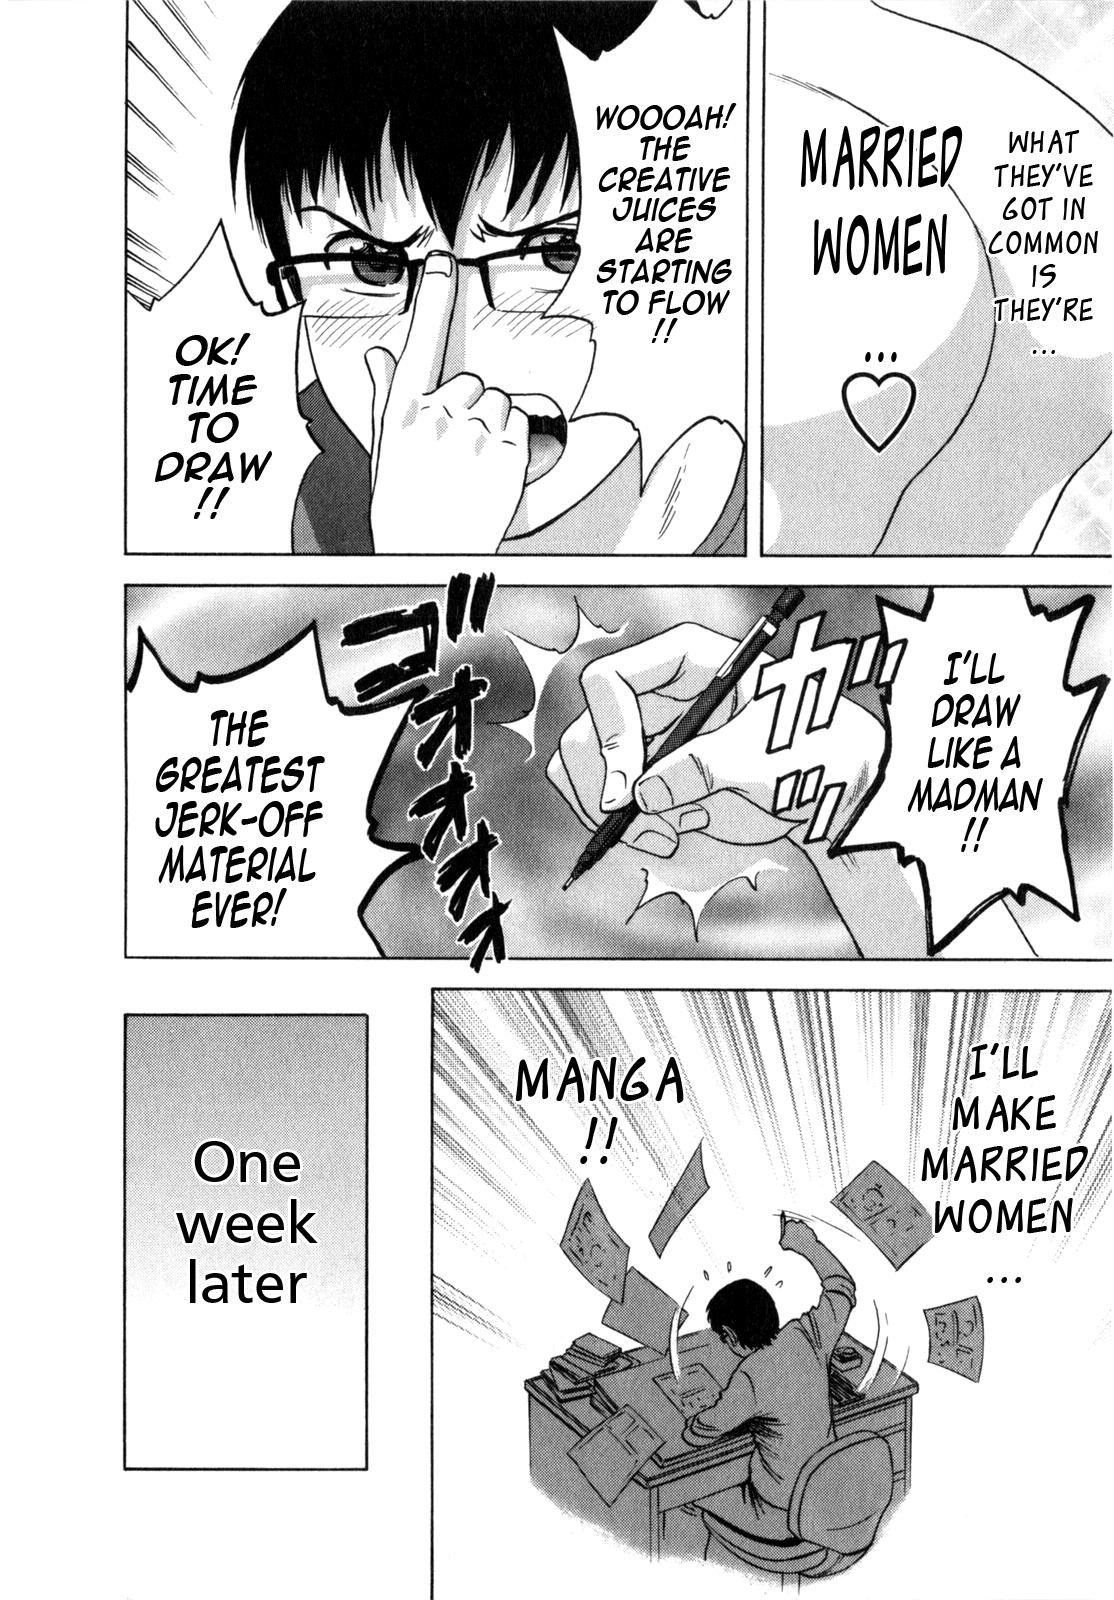 [Hidemaru] Life with Married Women Just Like a Manga 1 - Ch. 1-4 [English] {Tadanohito} 69